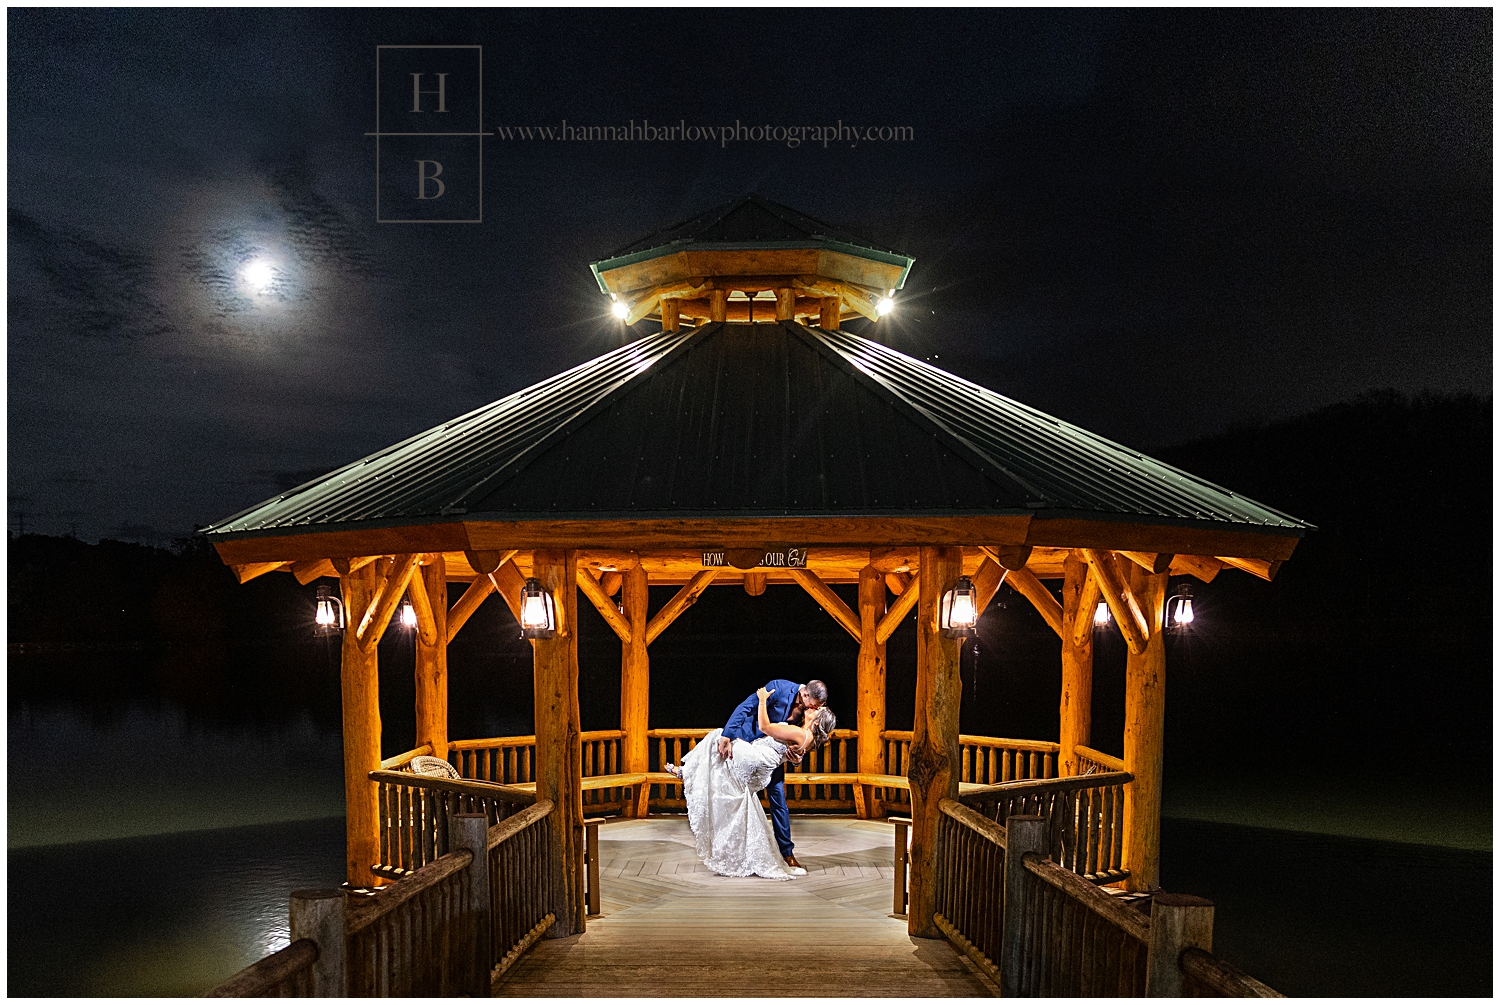 Groom dips bride at night under full moon in gazebo